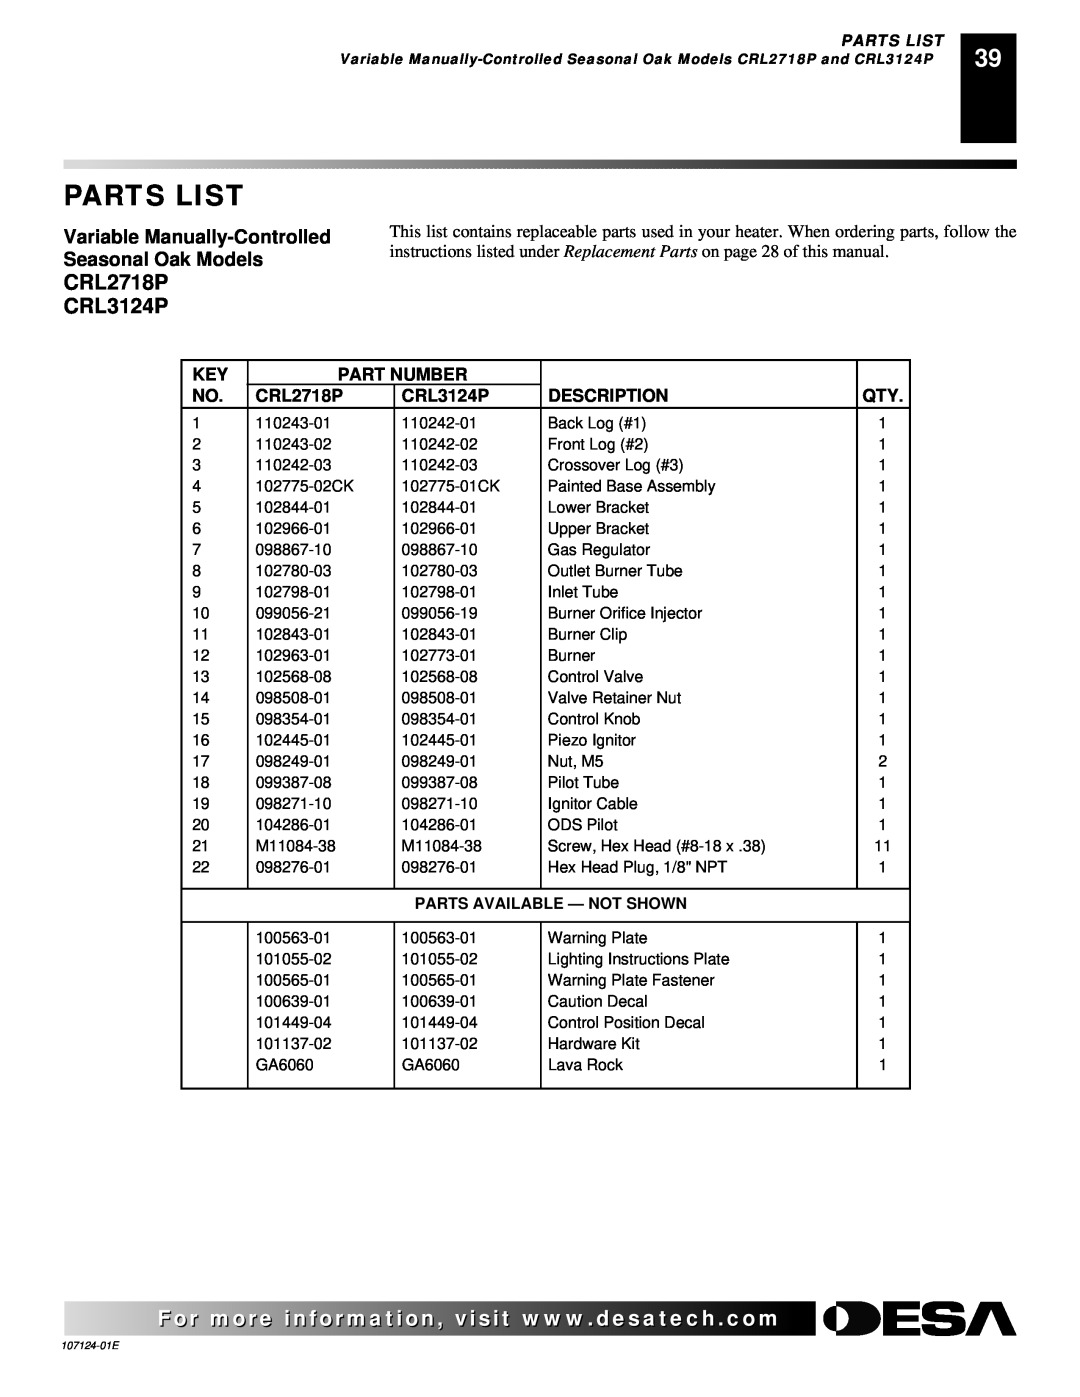 Desa CGD3924P Parts List, CRL2718P, CRL3124P, Variable Manually-Controlled, Seasonal Oak Models, Part Number, Description 